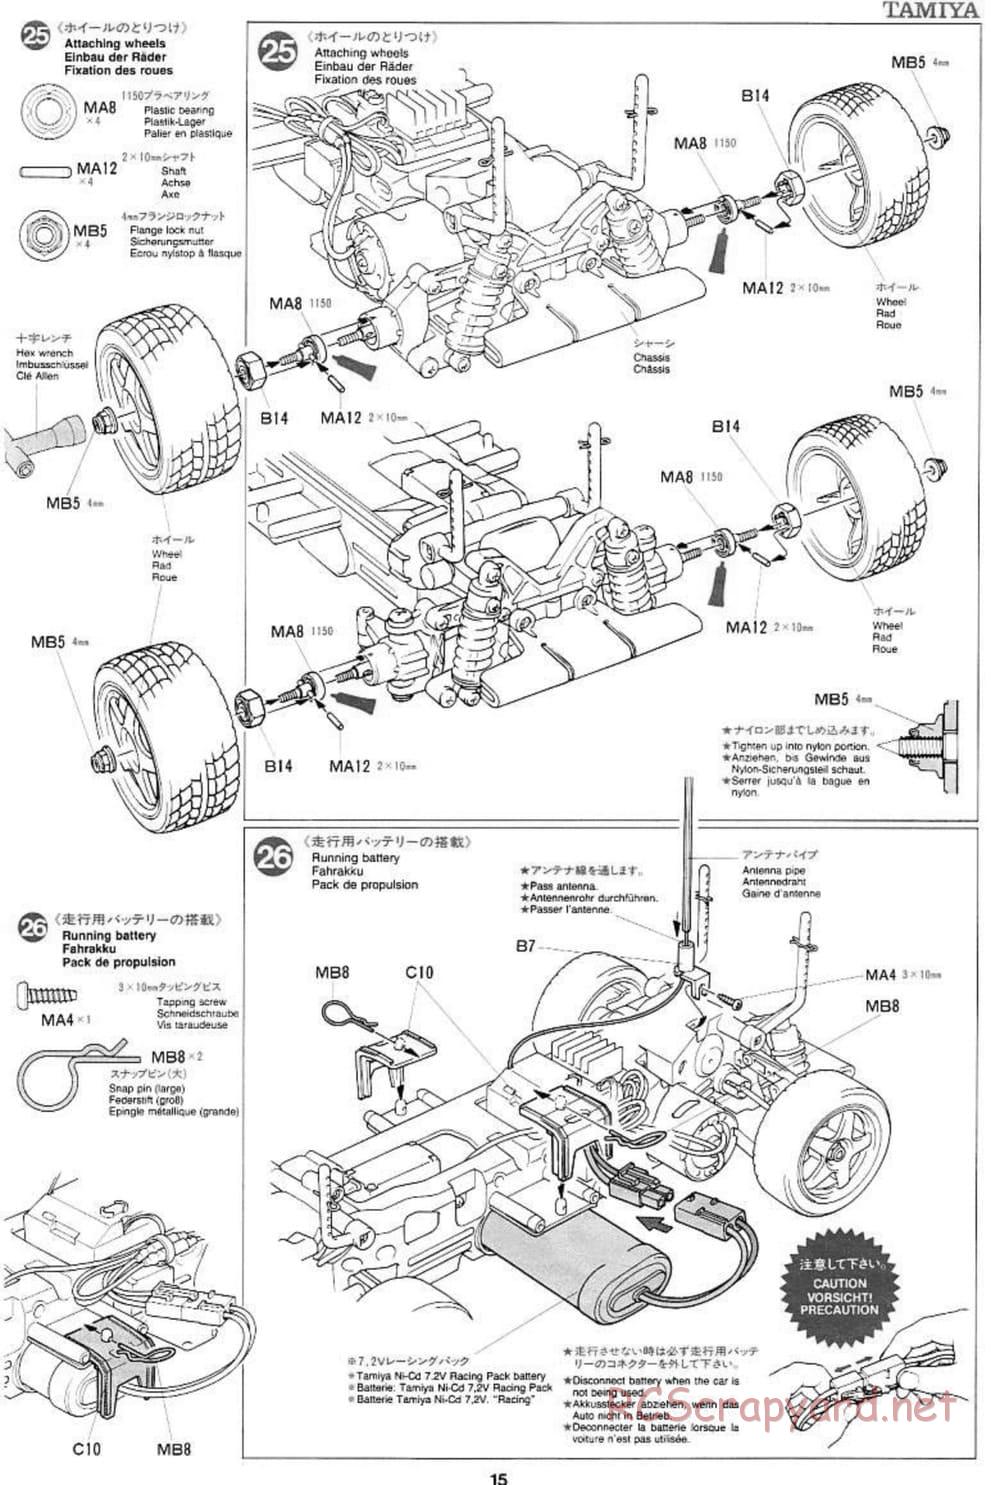 Tamiya - Ford SVT F-150 Lightning - TL-01 Chassis - Manual - Page 15